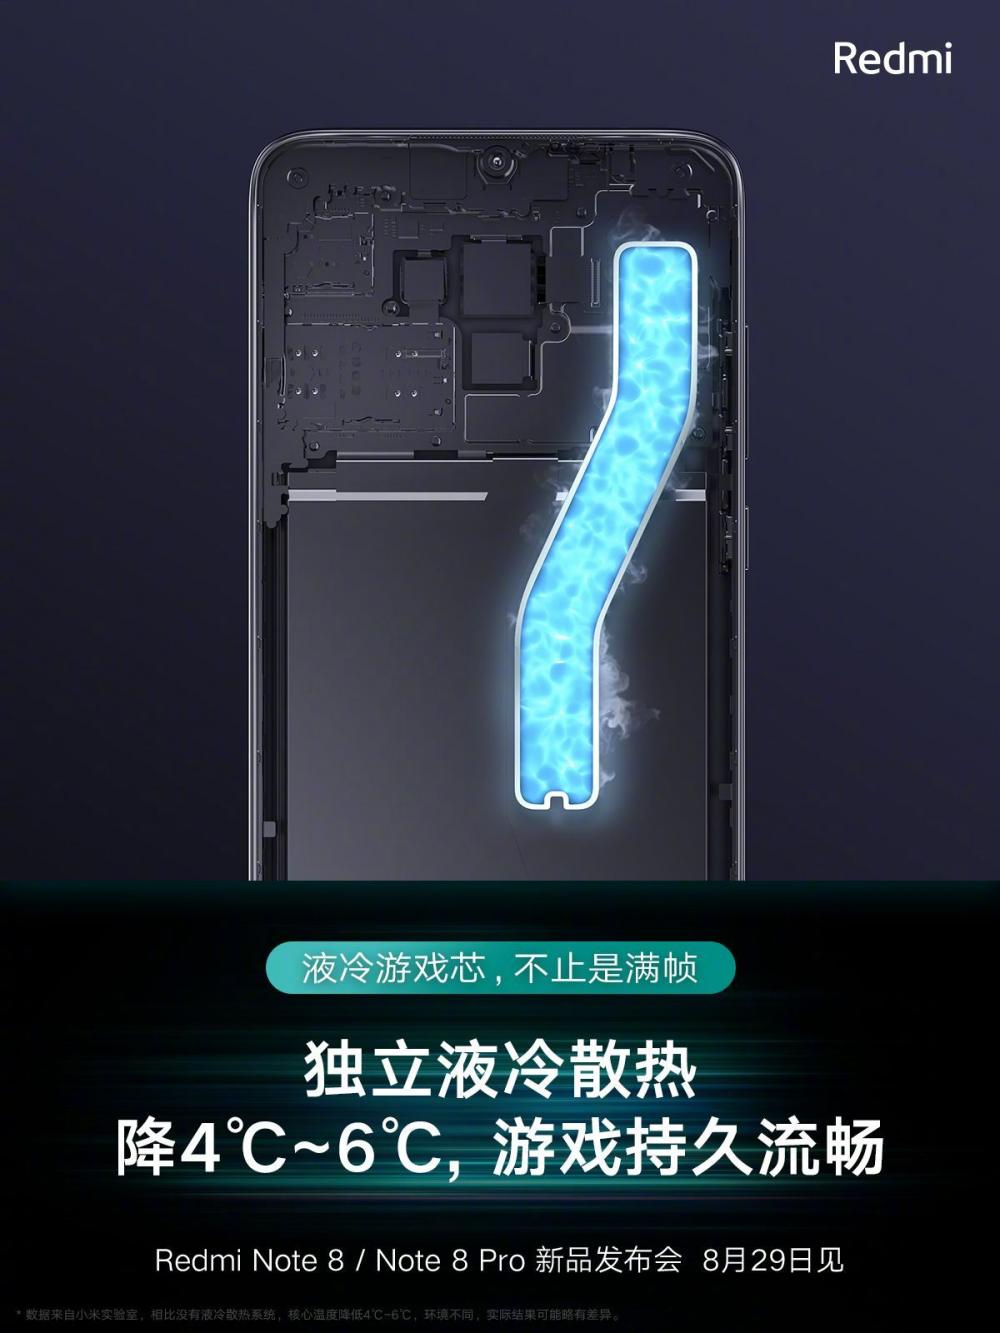 Note 8 Pro, Redmi Note 8 Pro: Αποκαλύφθηκε σε πεντακάθαρες press images